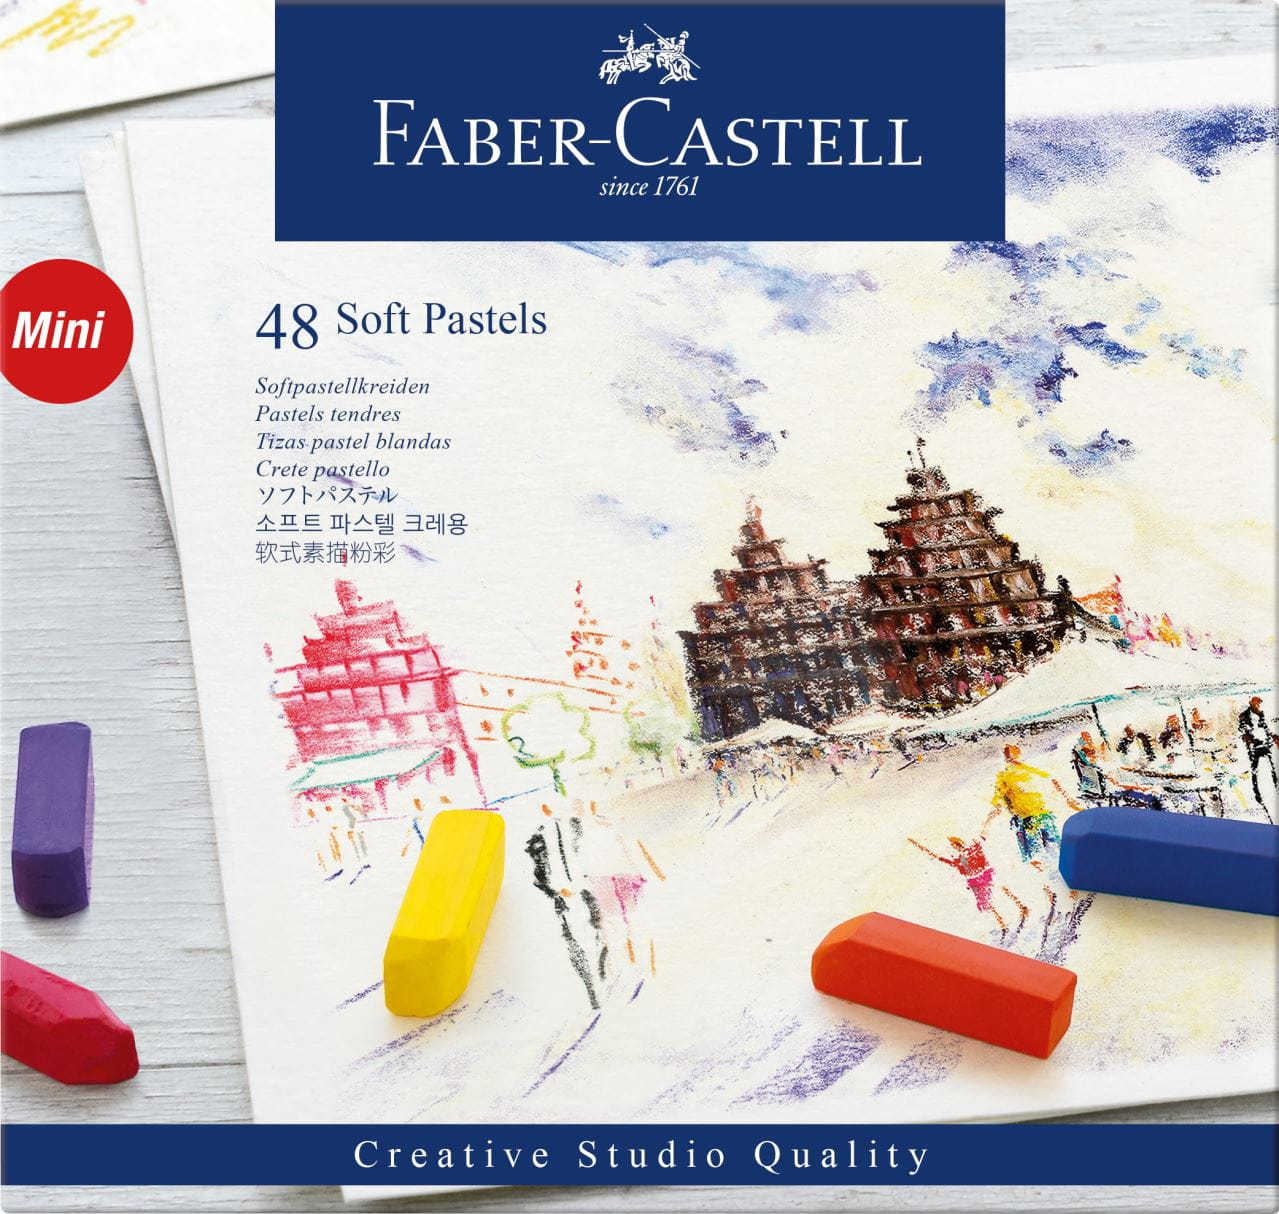 Faber-Castell - Soft pastels mini, cardboard wallet of 48